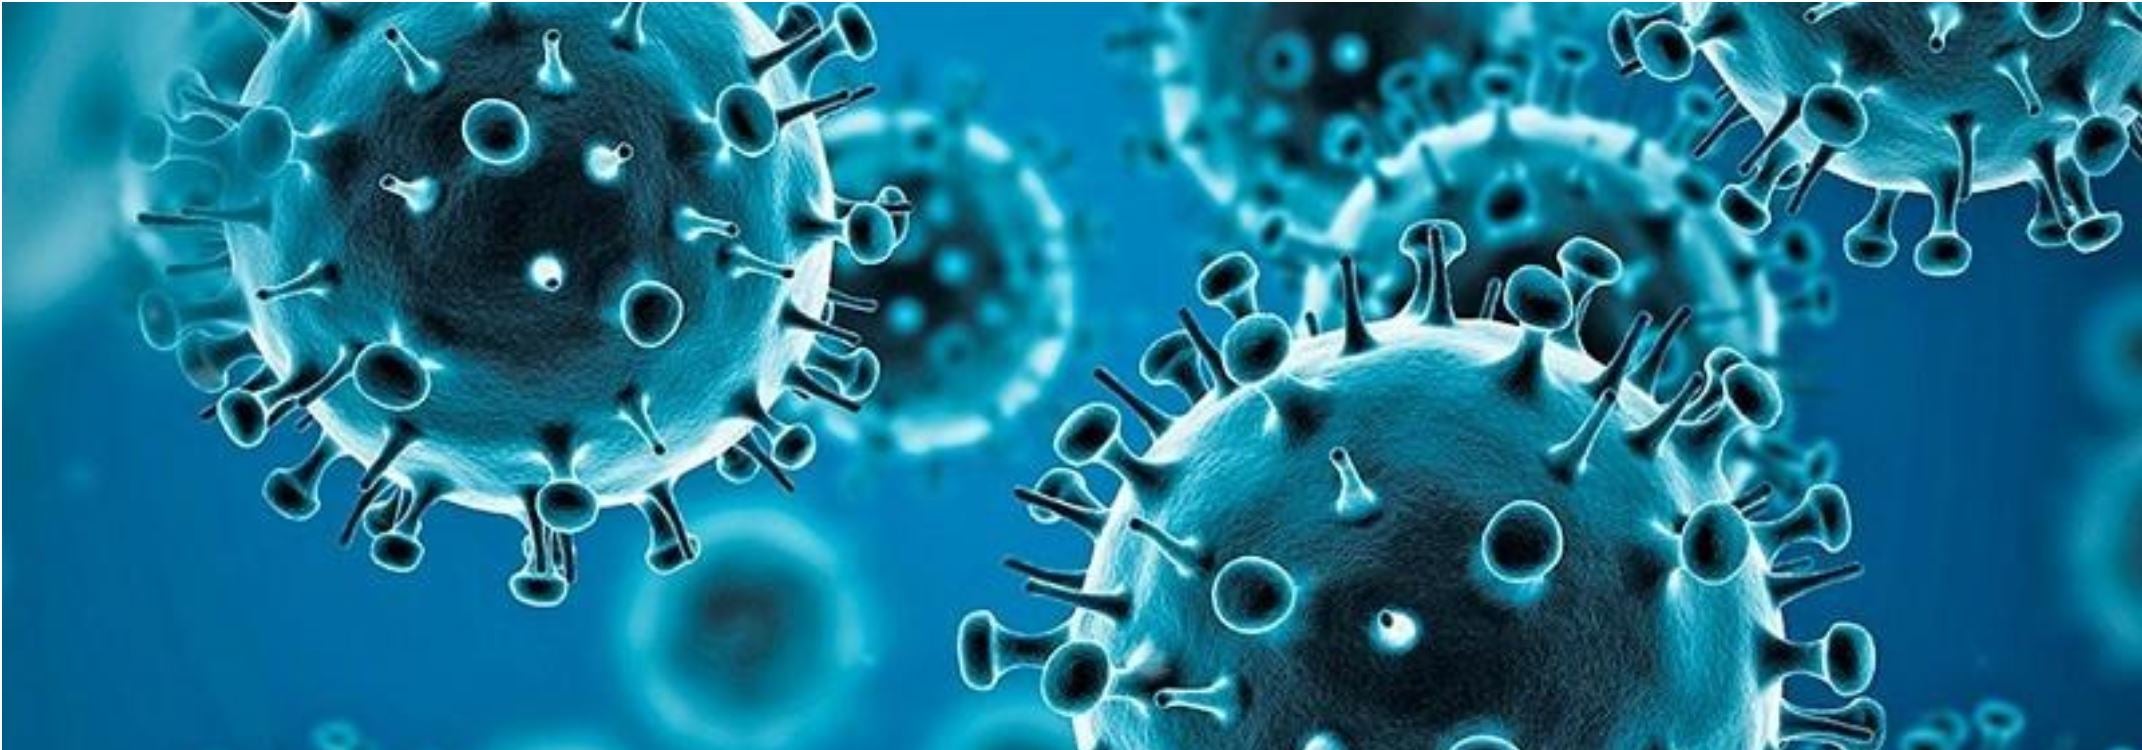 Illustration of coronavirus in blue shades